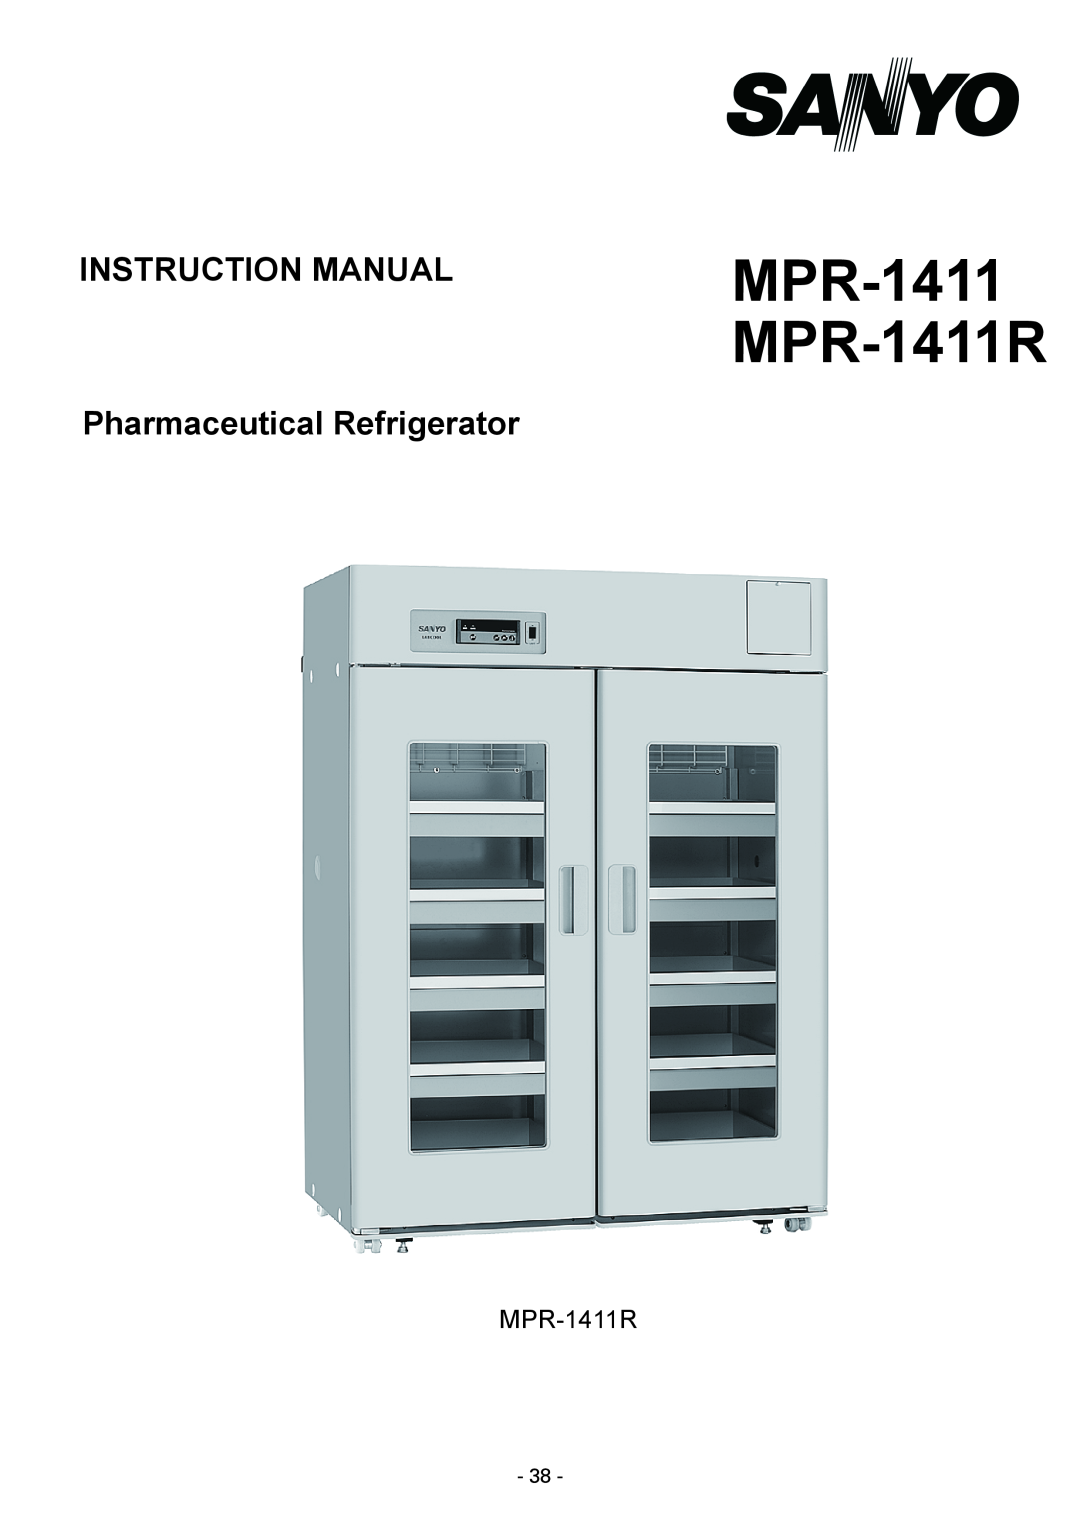 Sanyo instruction manual MPR-1411 MPR-1411R 